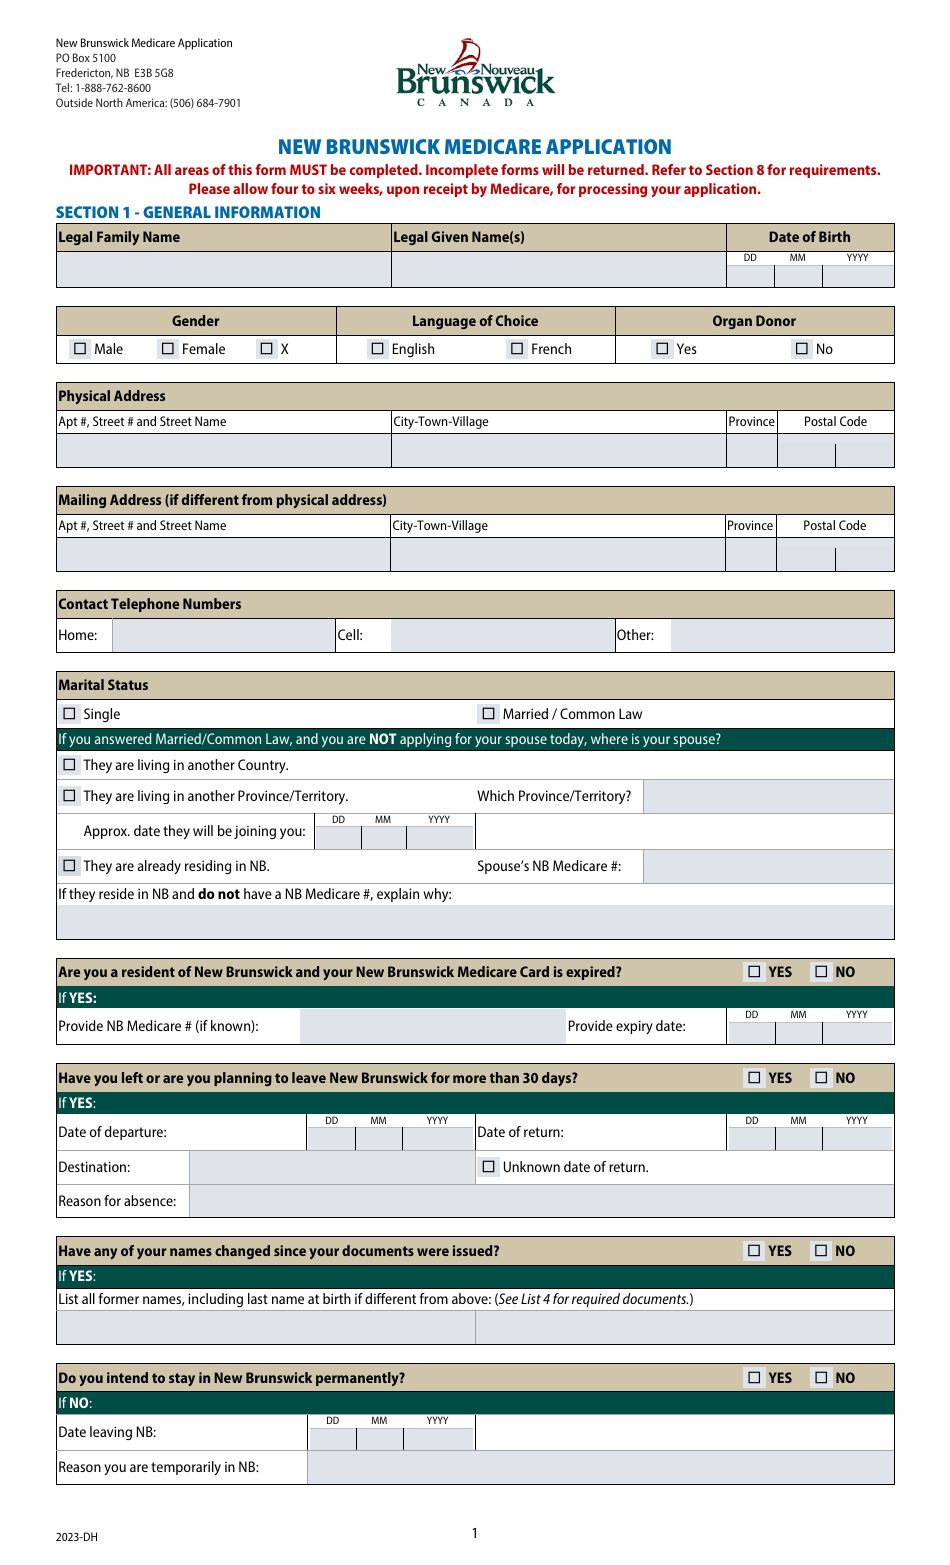 New Brunswick Medicare Application - New Brunswick, Canada, Page 1